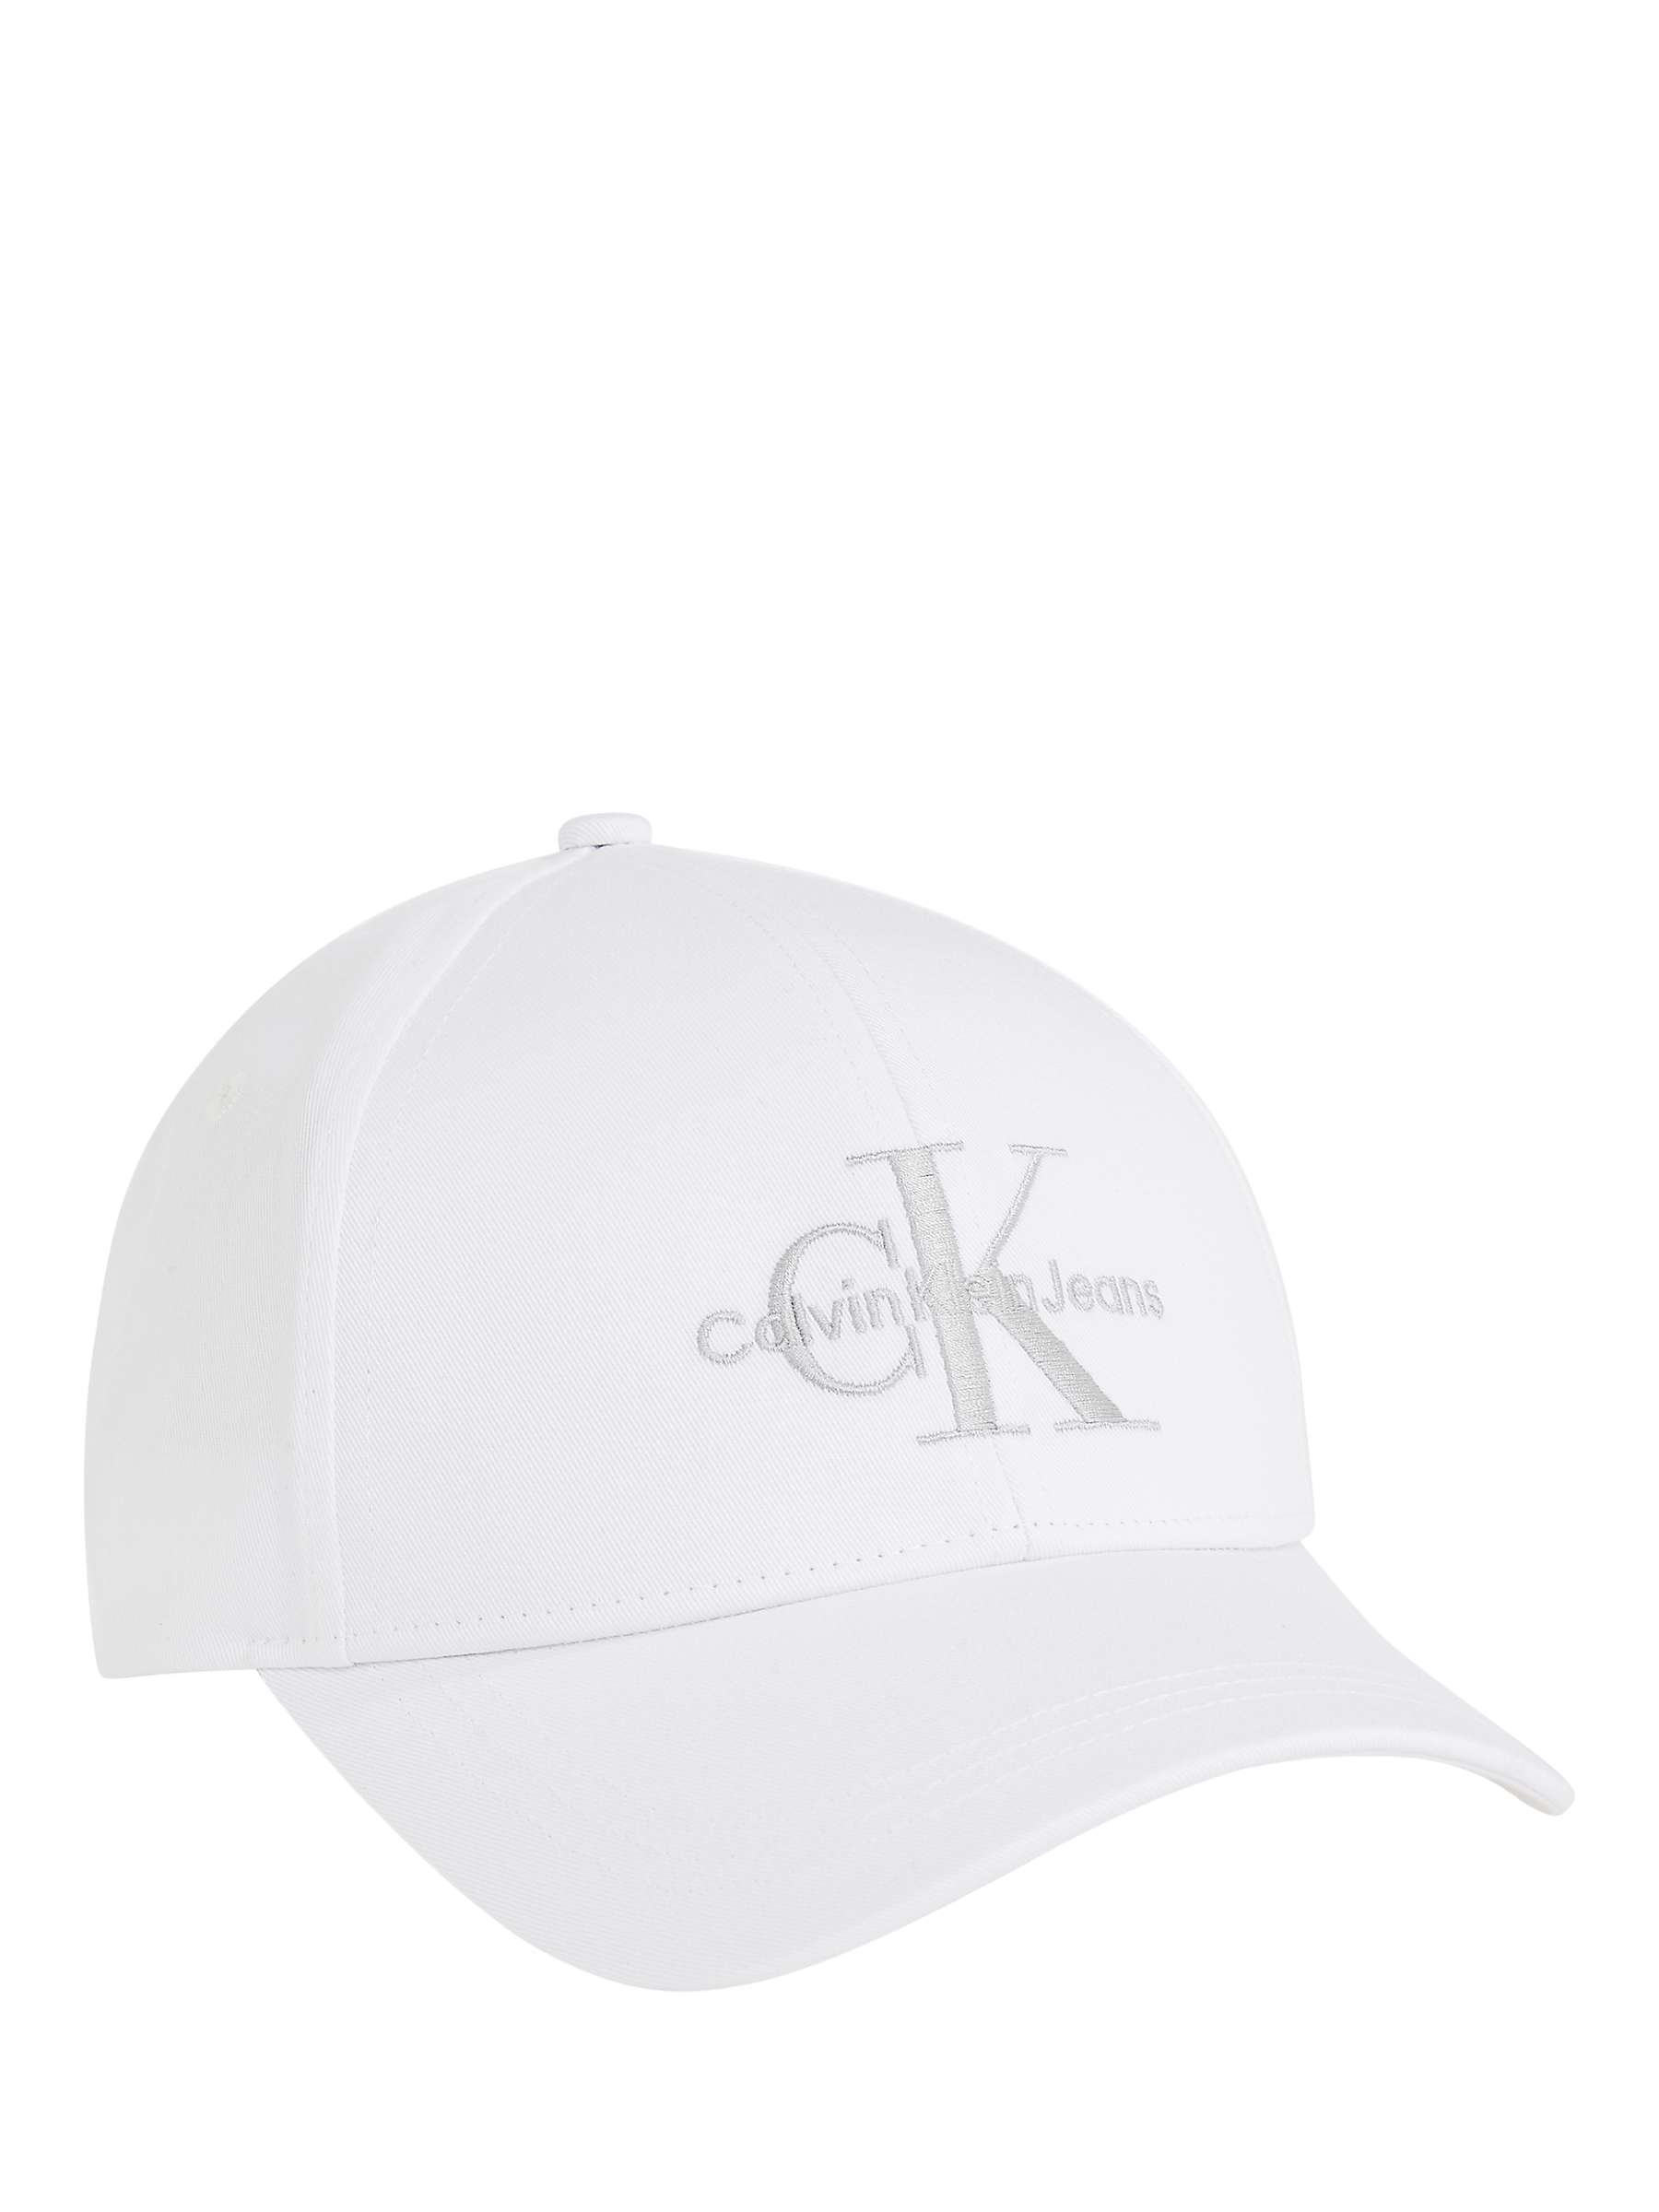 Buy Calvin Klein Monogram Cap, White/Silver Logo Online at johnlewis.com